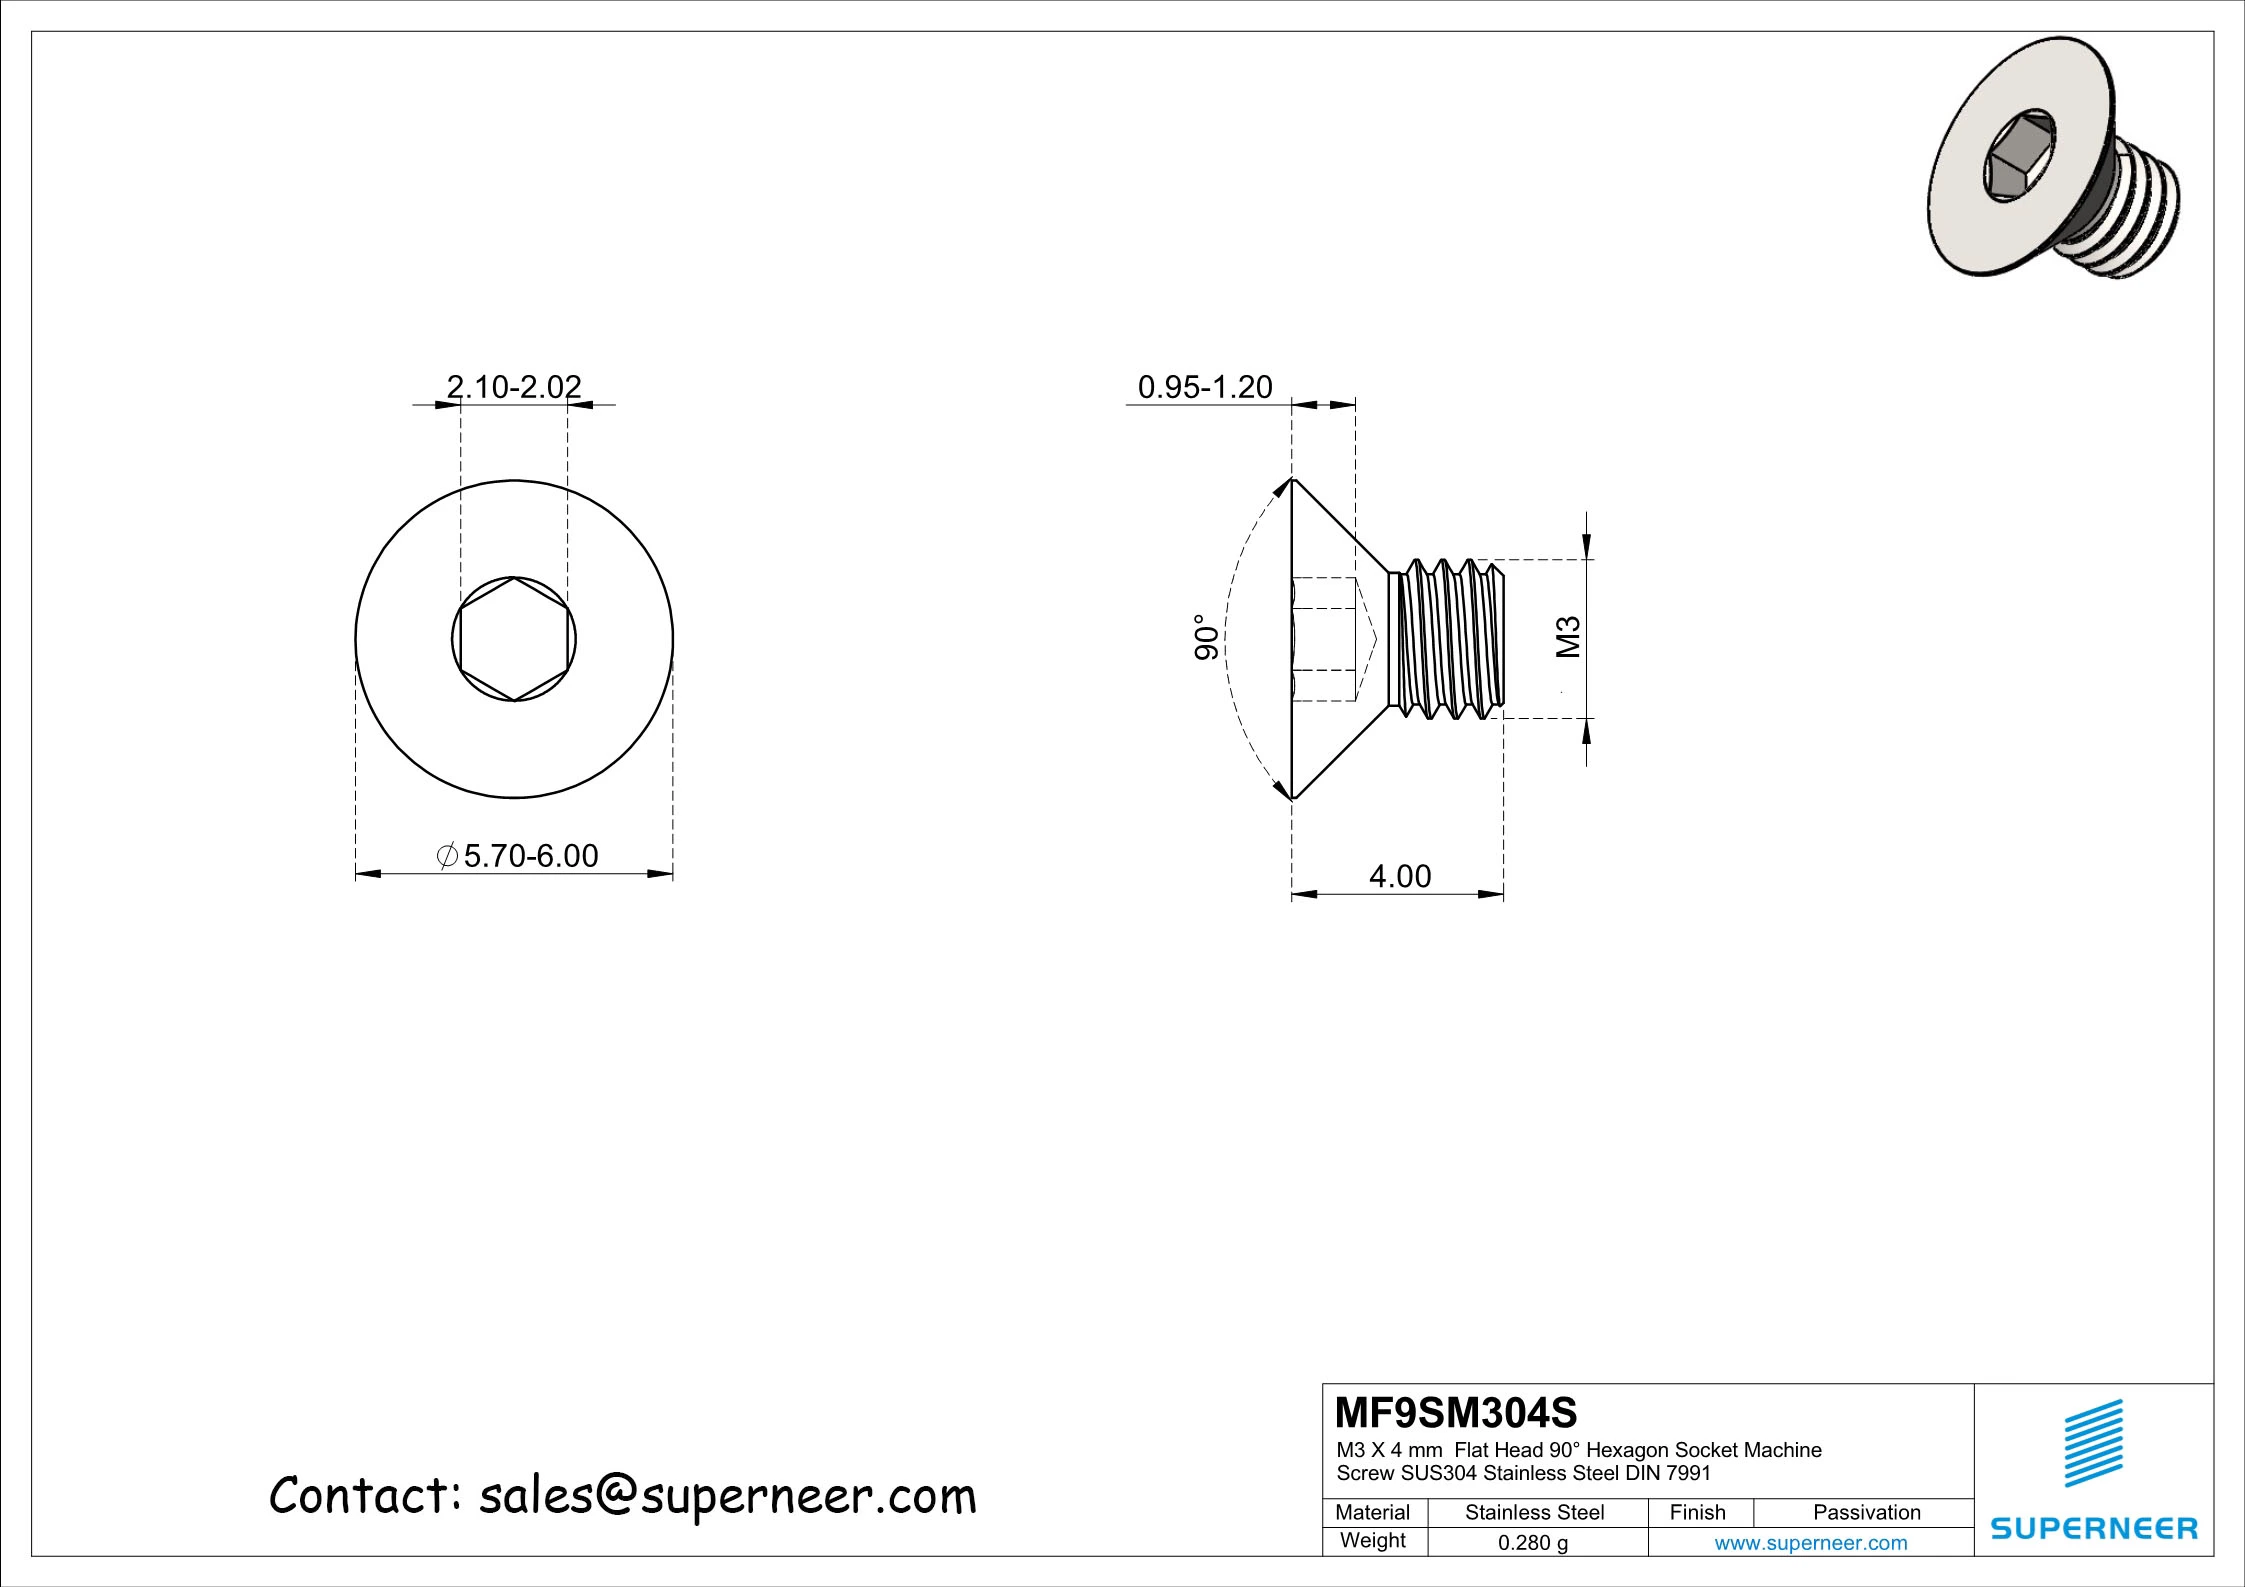 M3 x 4 mm Flat Head 90° Hexagon Socket Machine Screw SUS304 Stainless Steel Inox DIN 7991